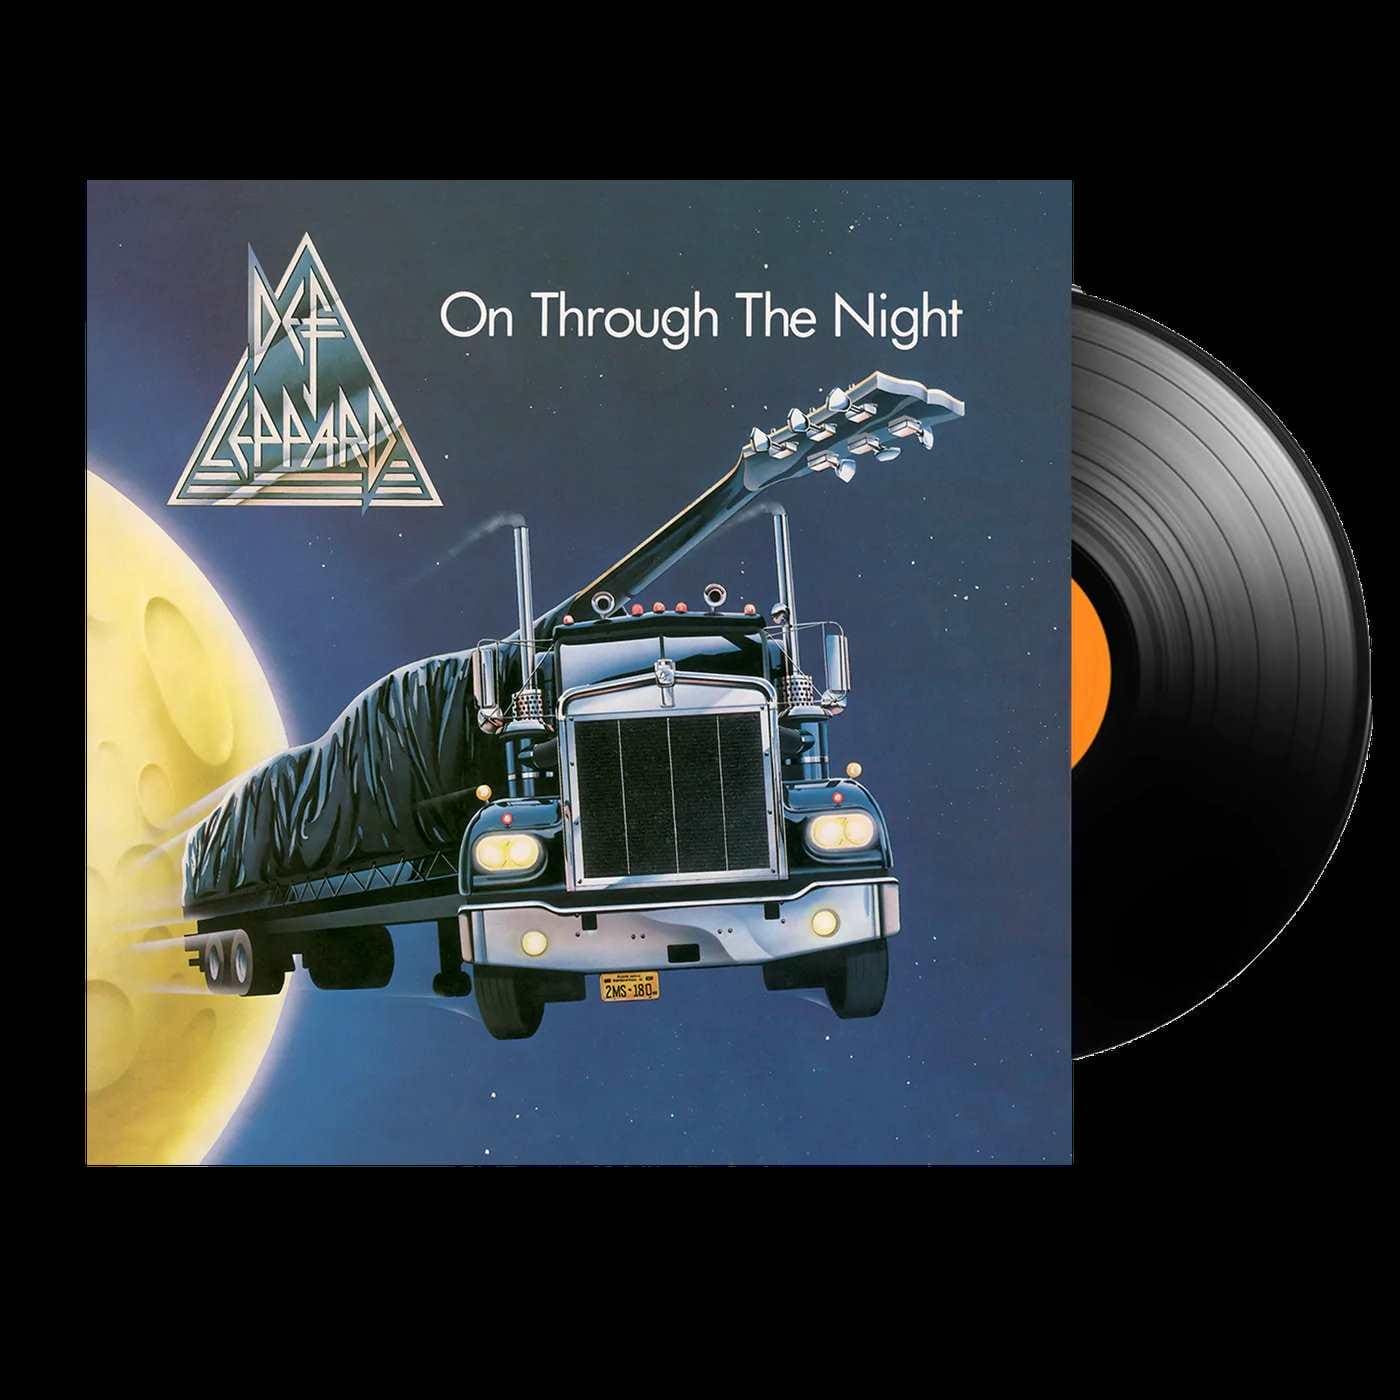 DEF LEPPARD - On Through The Night Vinyl - JWrayRecords